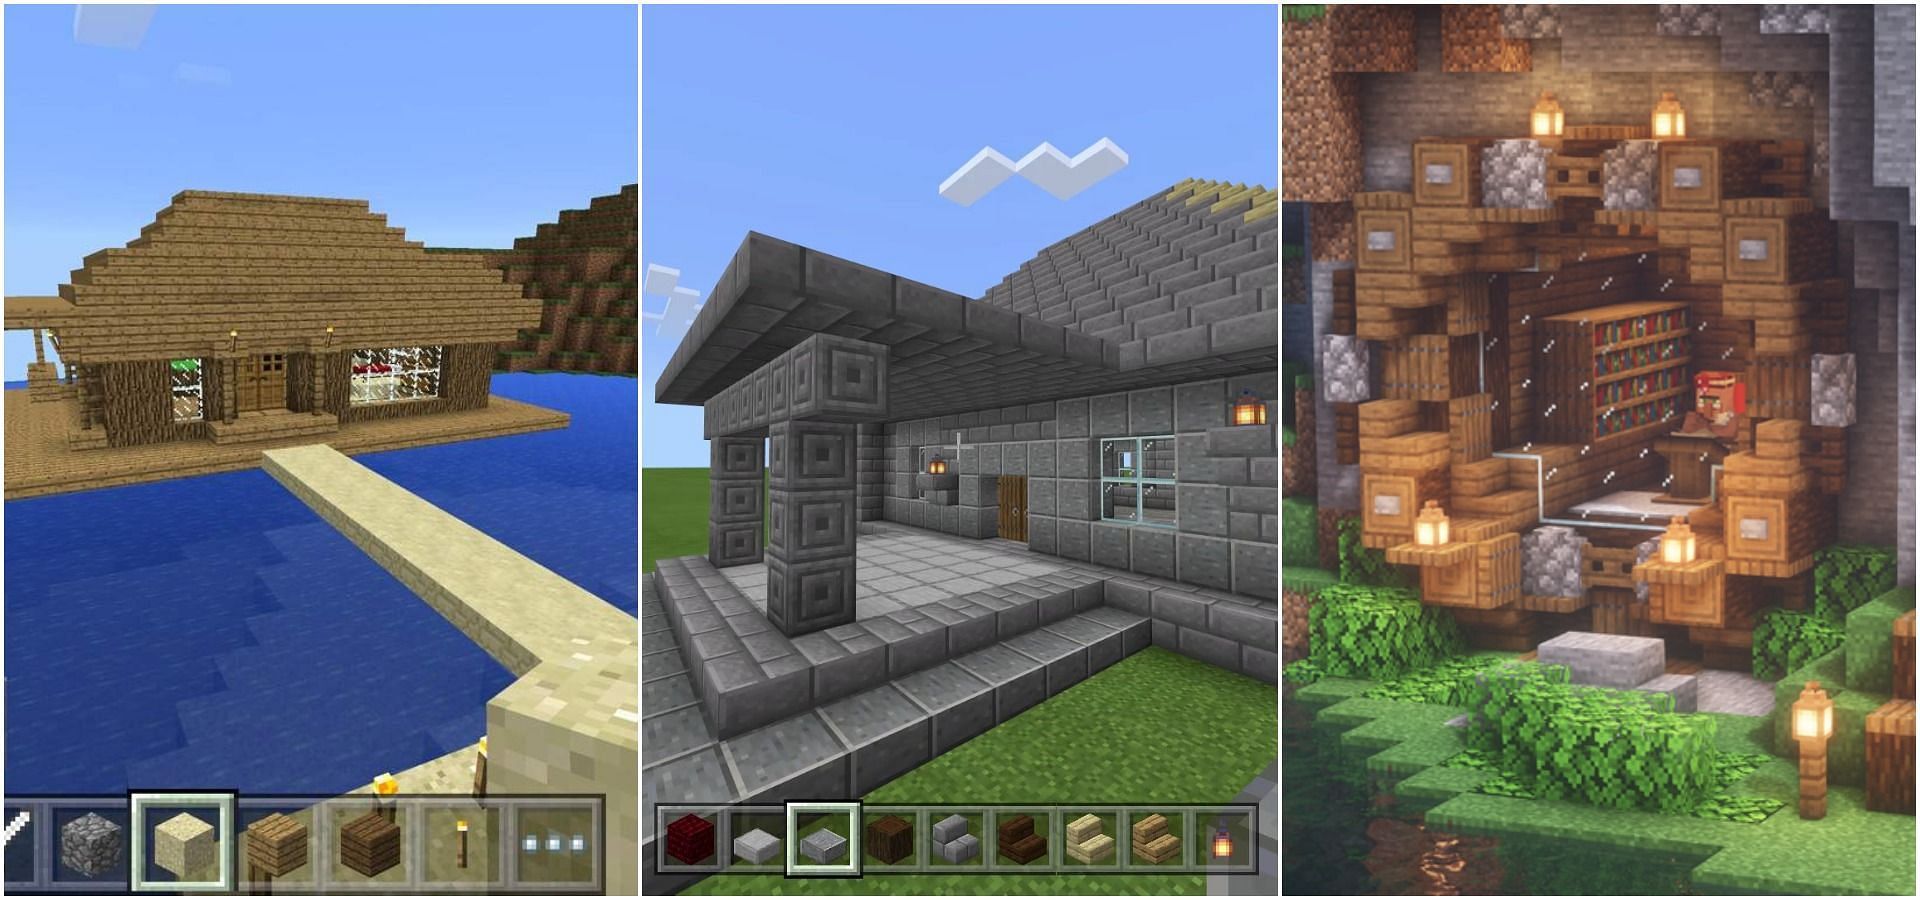 Beach house, Stone brick house, Mountain hobbit hole (Image via Reddit)